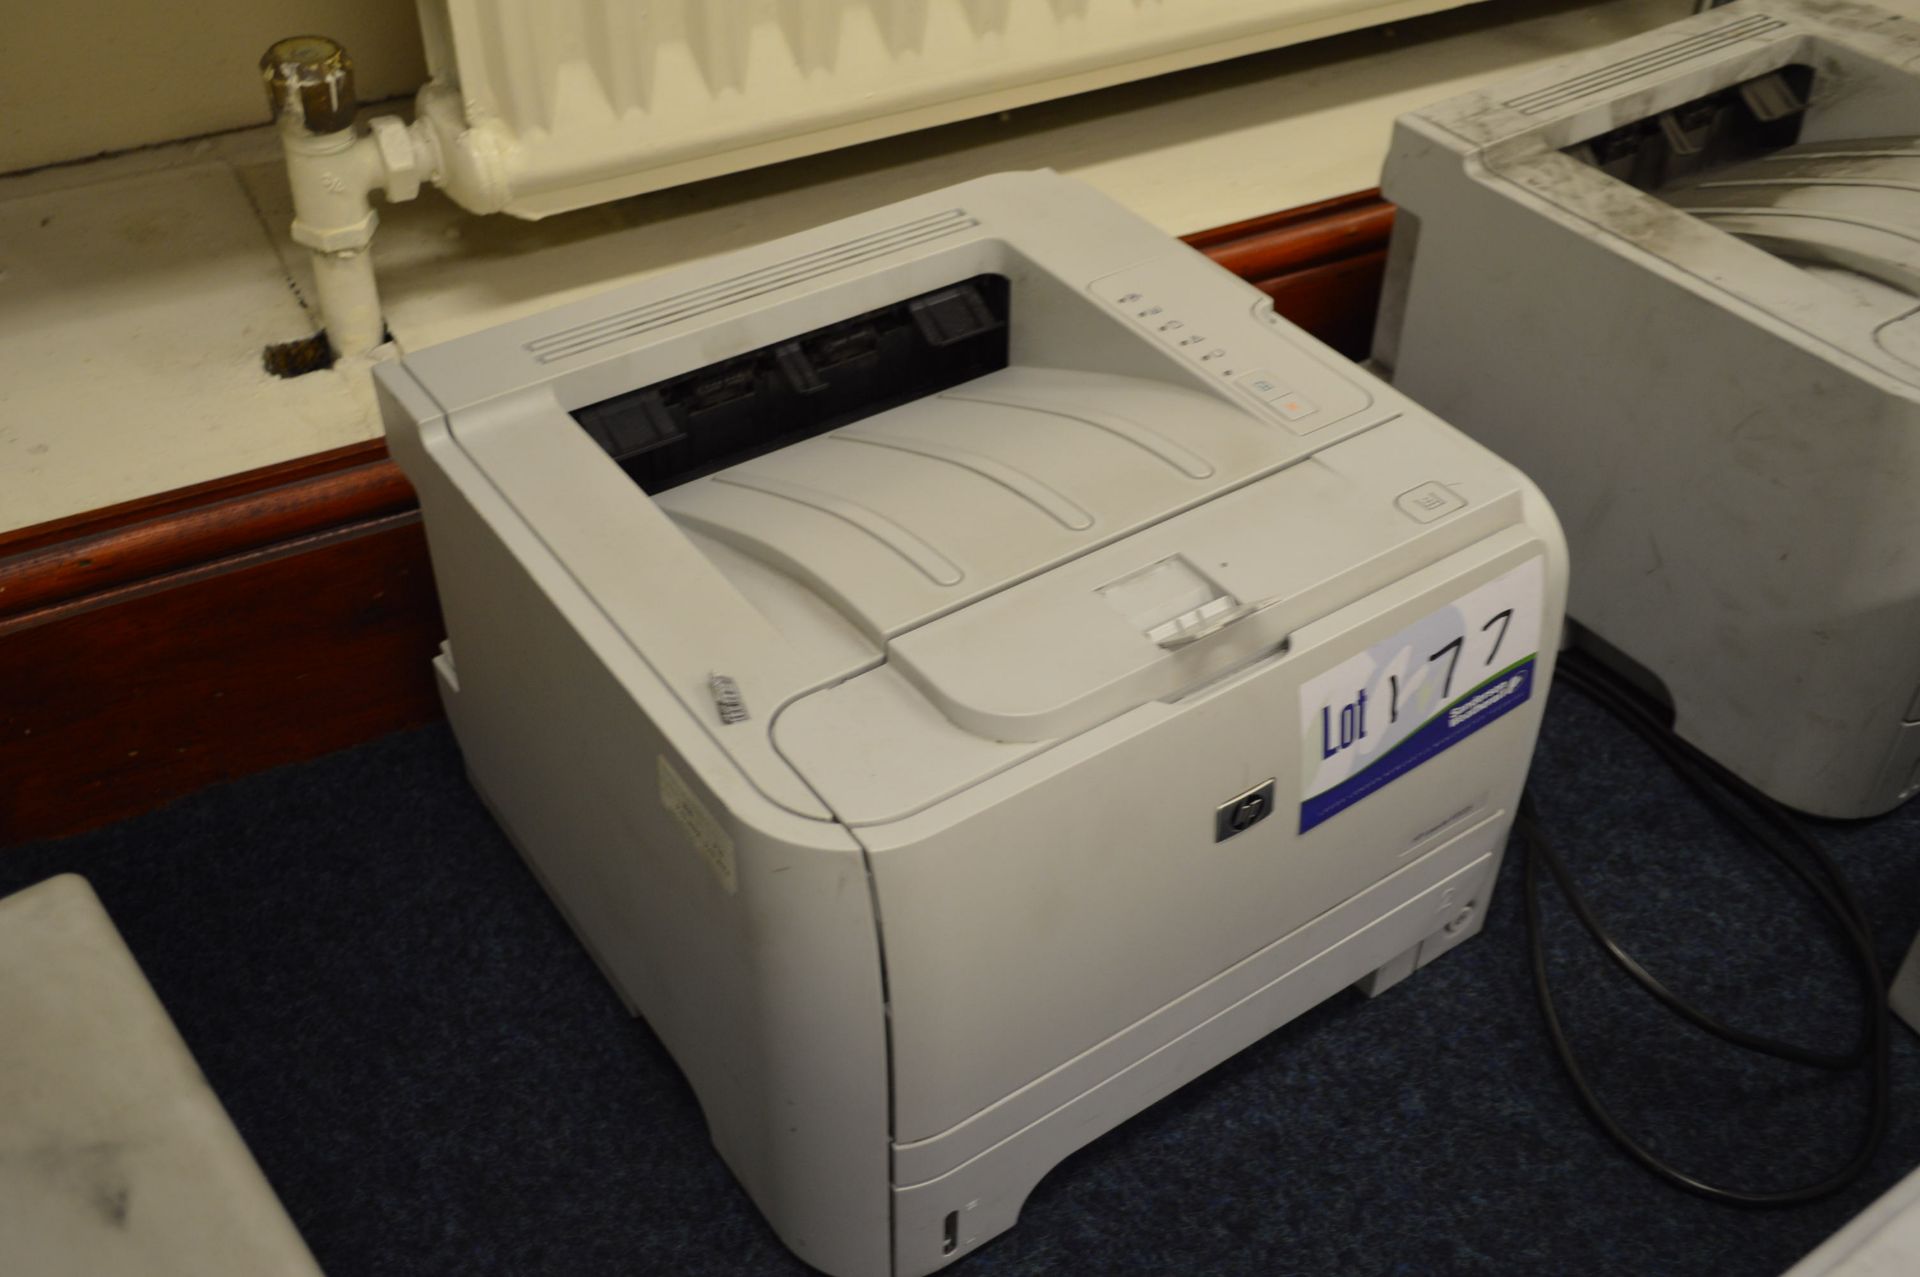 Hewlett Packard LaserJet P2035 Laser Printer, serial no. CNCOK13023 (69 – COO Office)